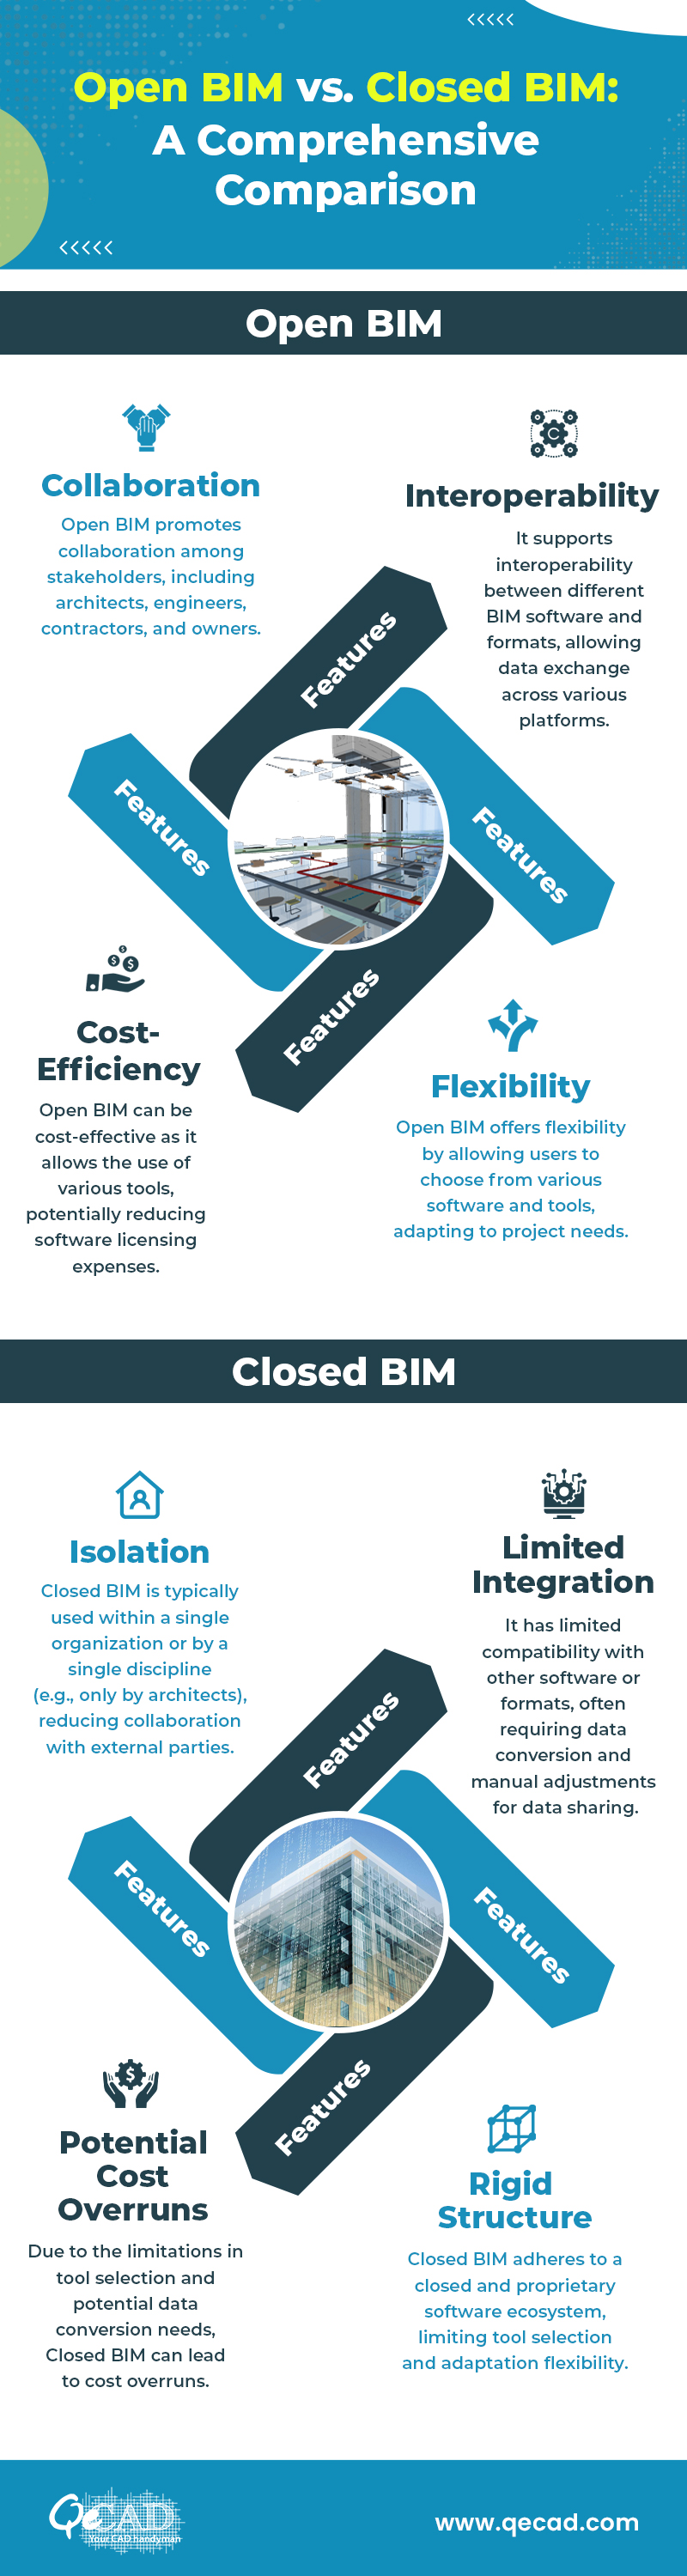 Open BIM vs. Closed BIM – Making the Right Choice